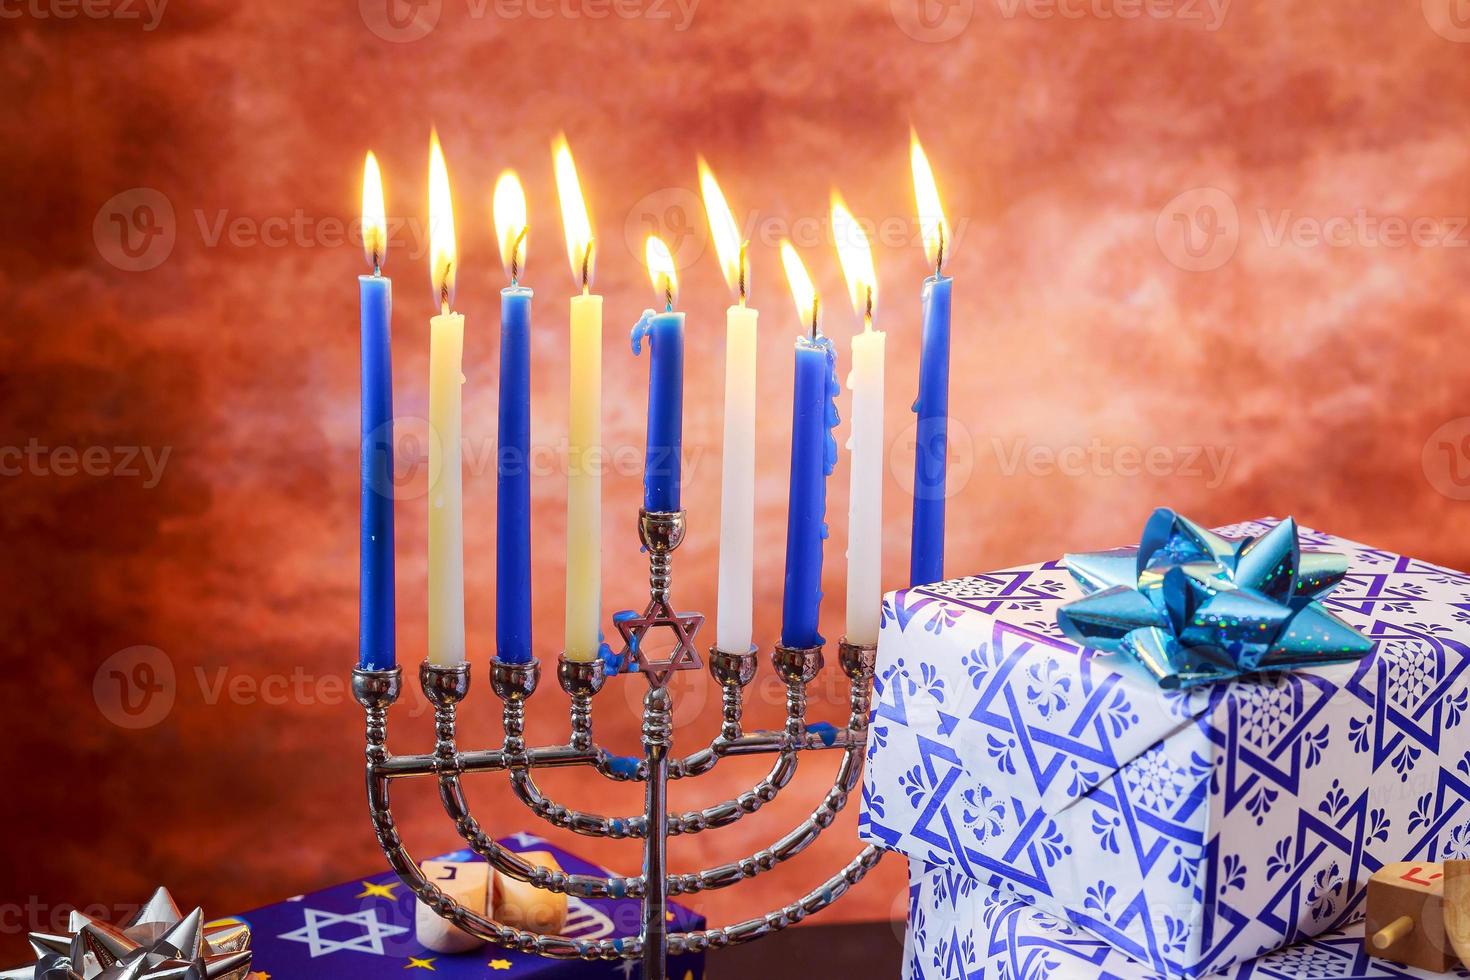 joodse feestdag hanukkah met menora over houten tafel foto